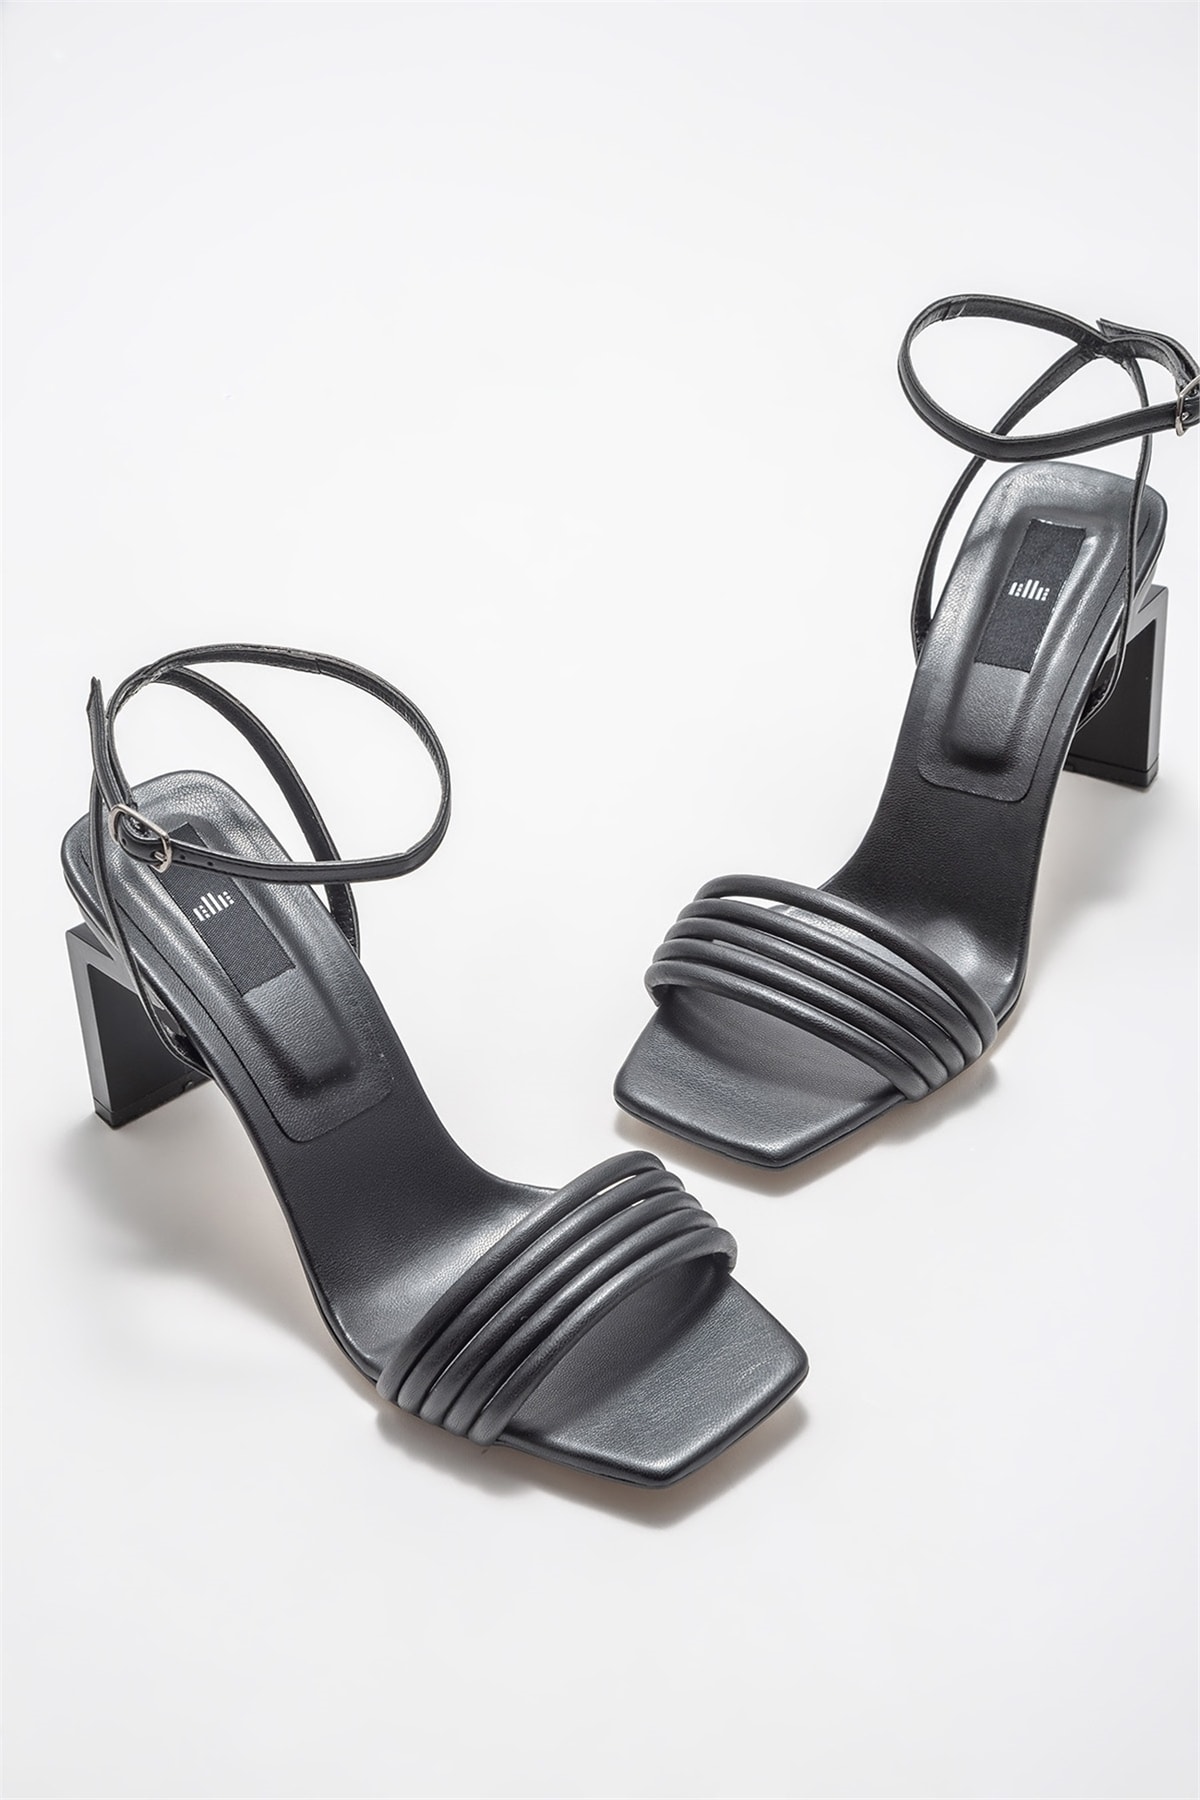 Elle Shoes Siyah Kadın Topuklu Sandalet VB6986